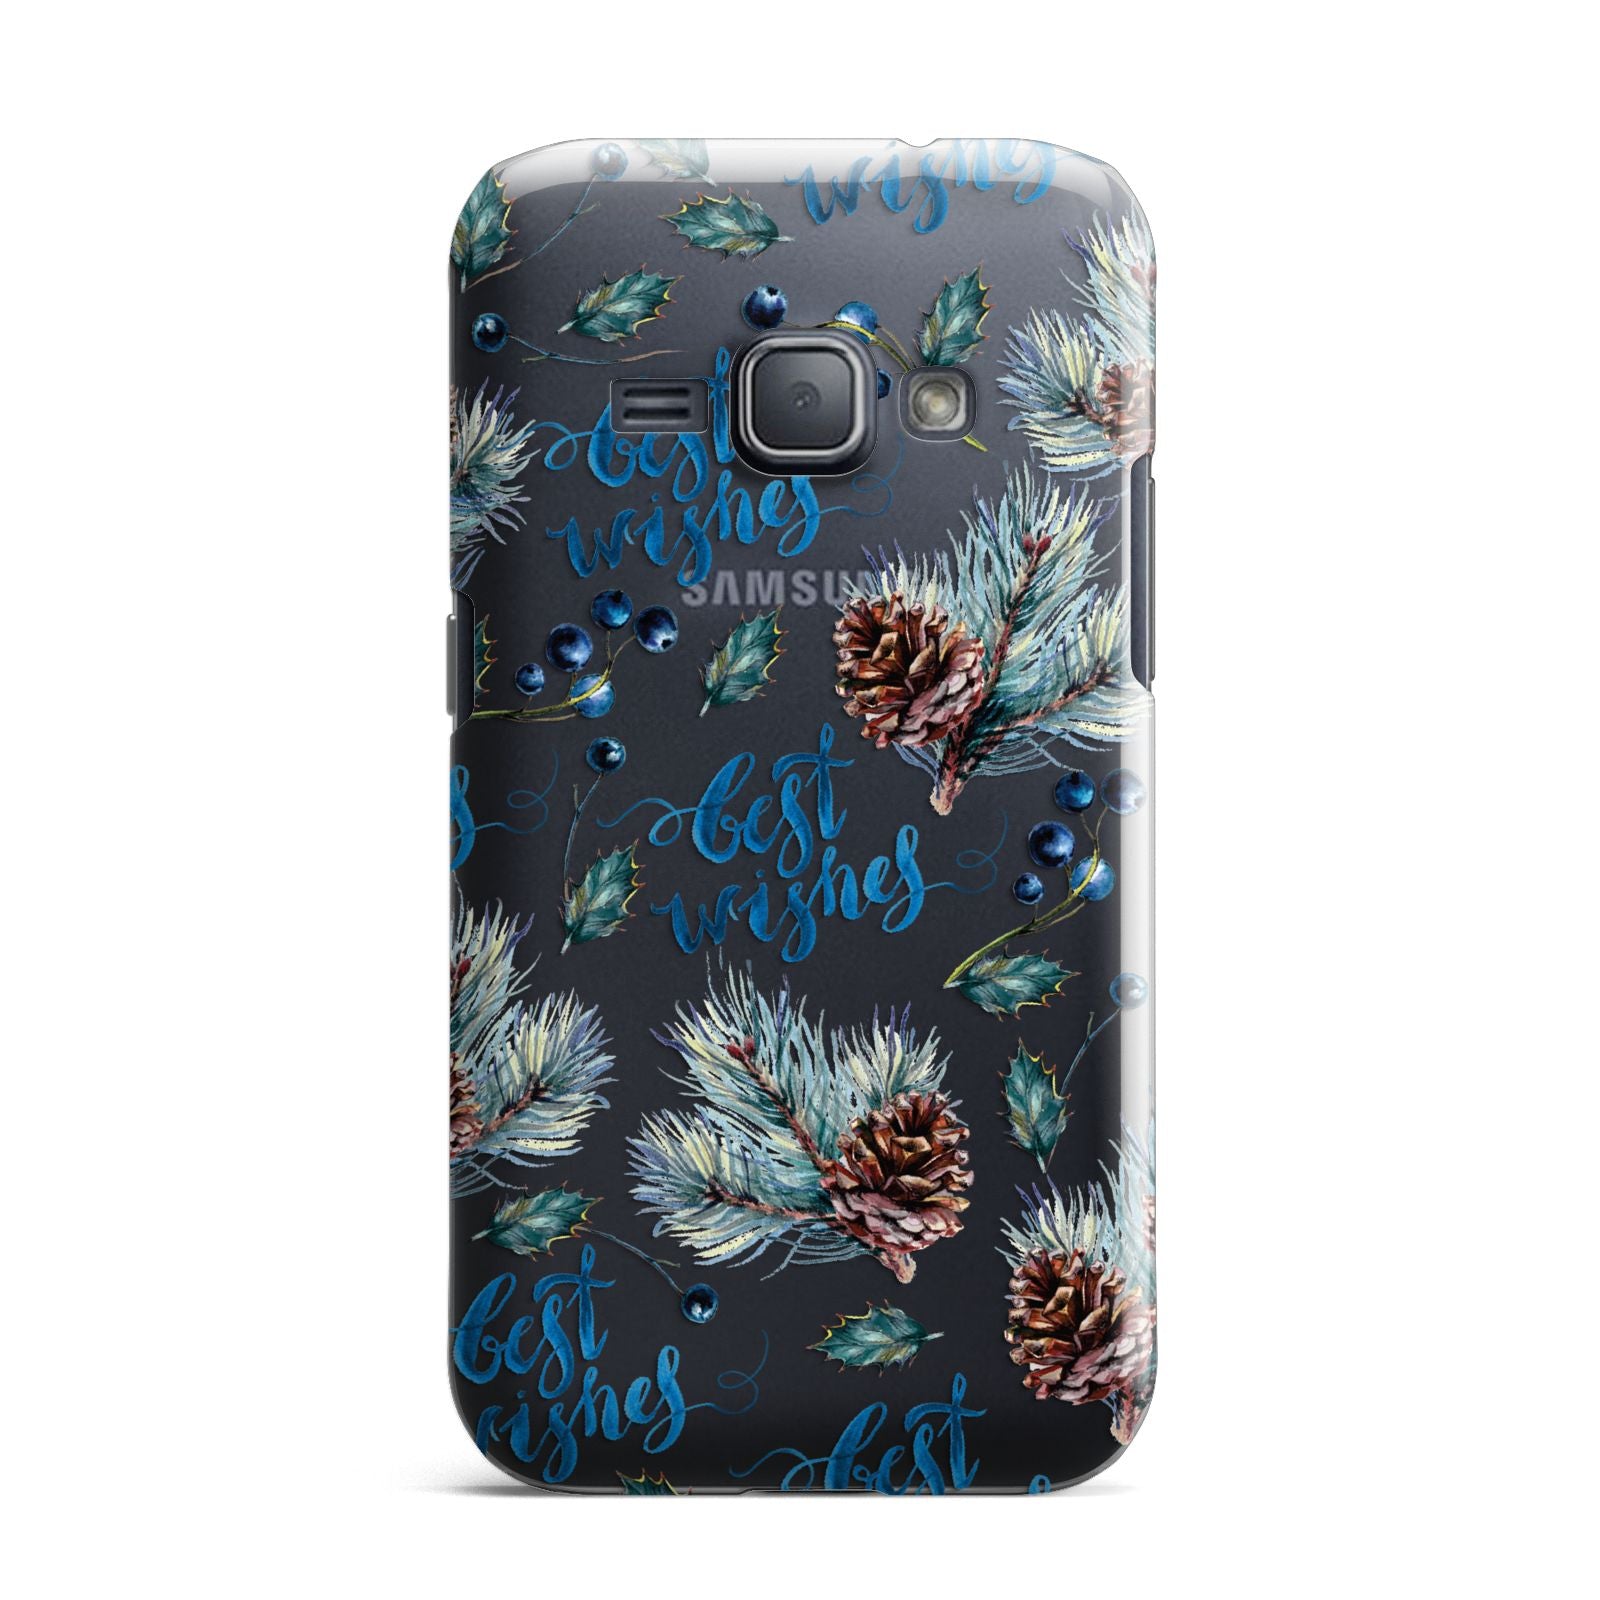 Pine cones wild berries Samsung Galaxy J1 2016 Case